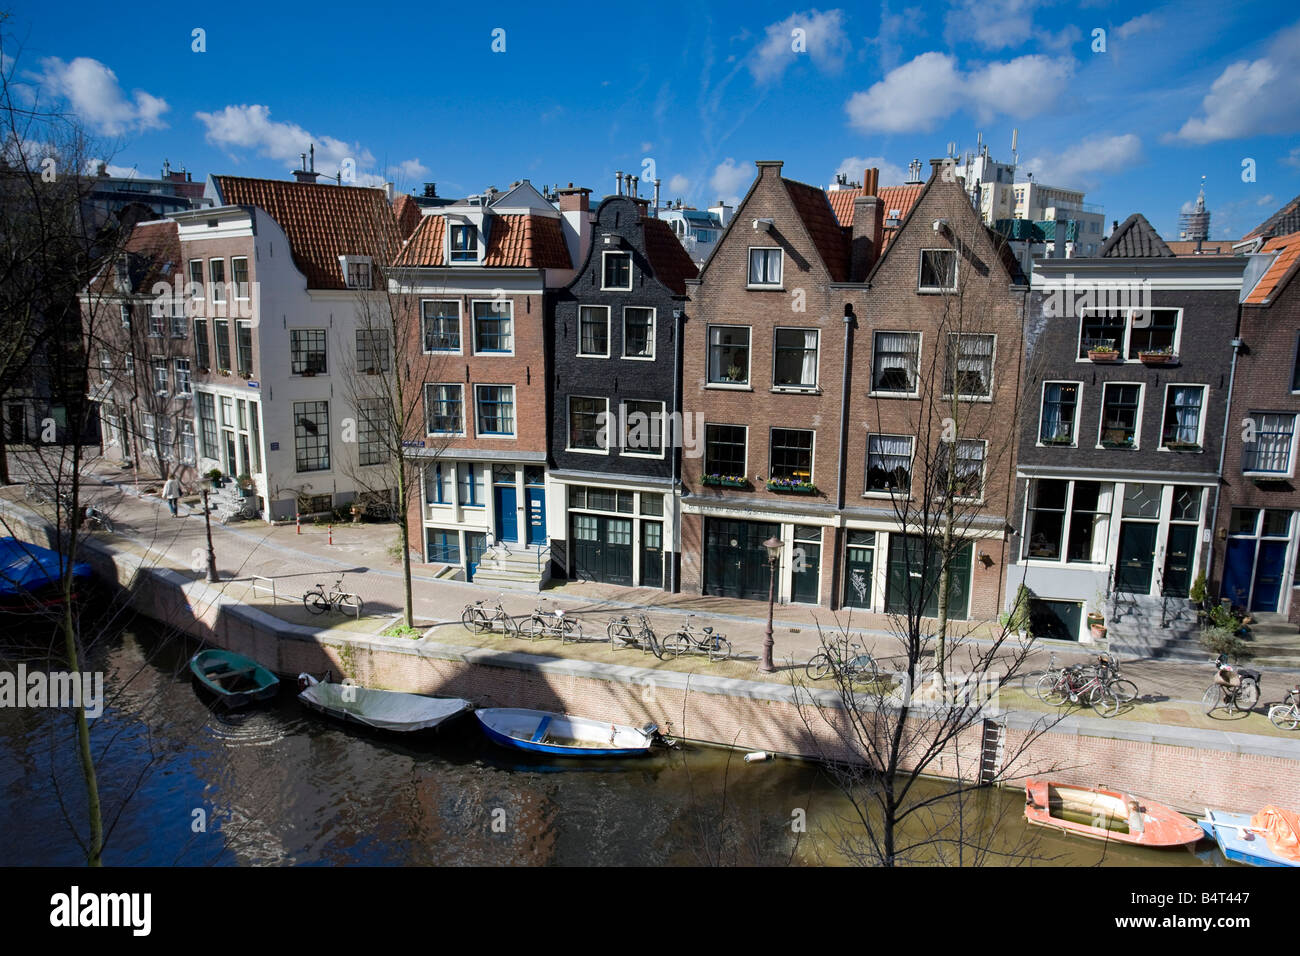 Kromboomsloot street et canal, Amsterdam, Pays-Bas Banque D'Images